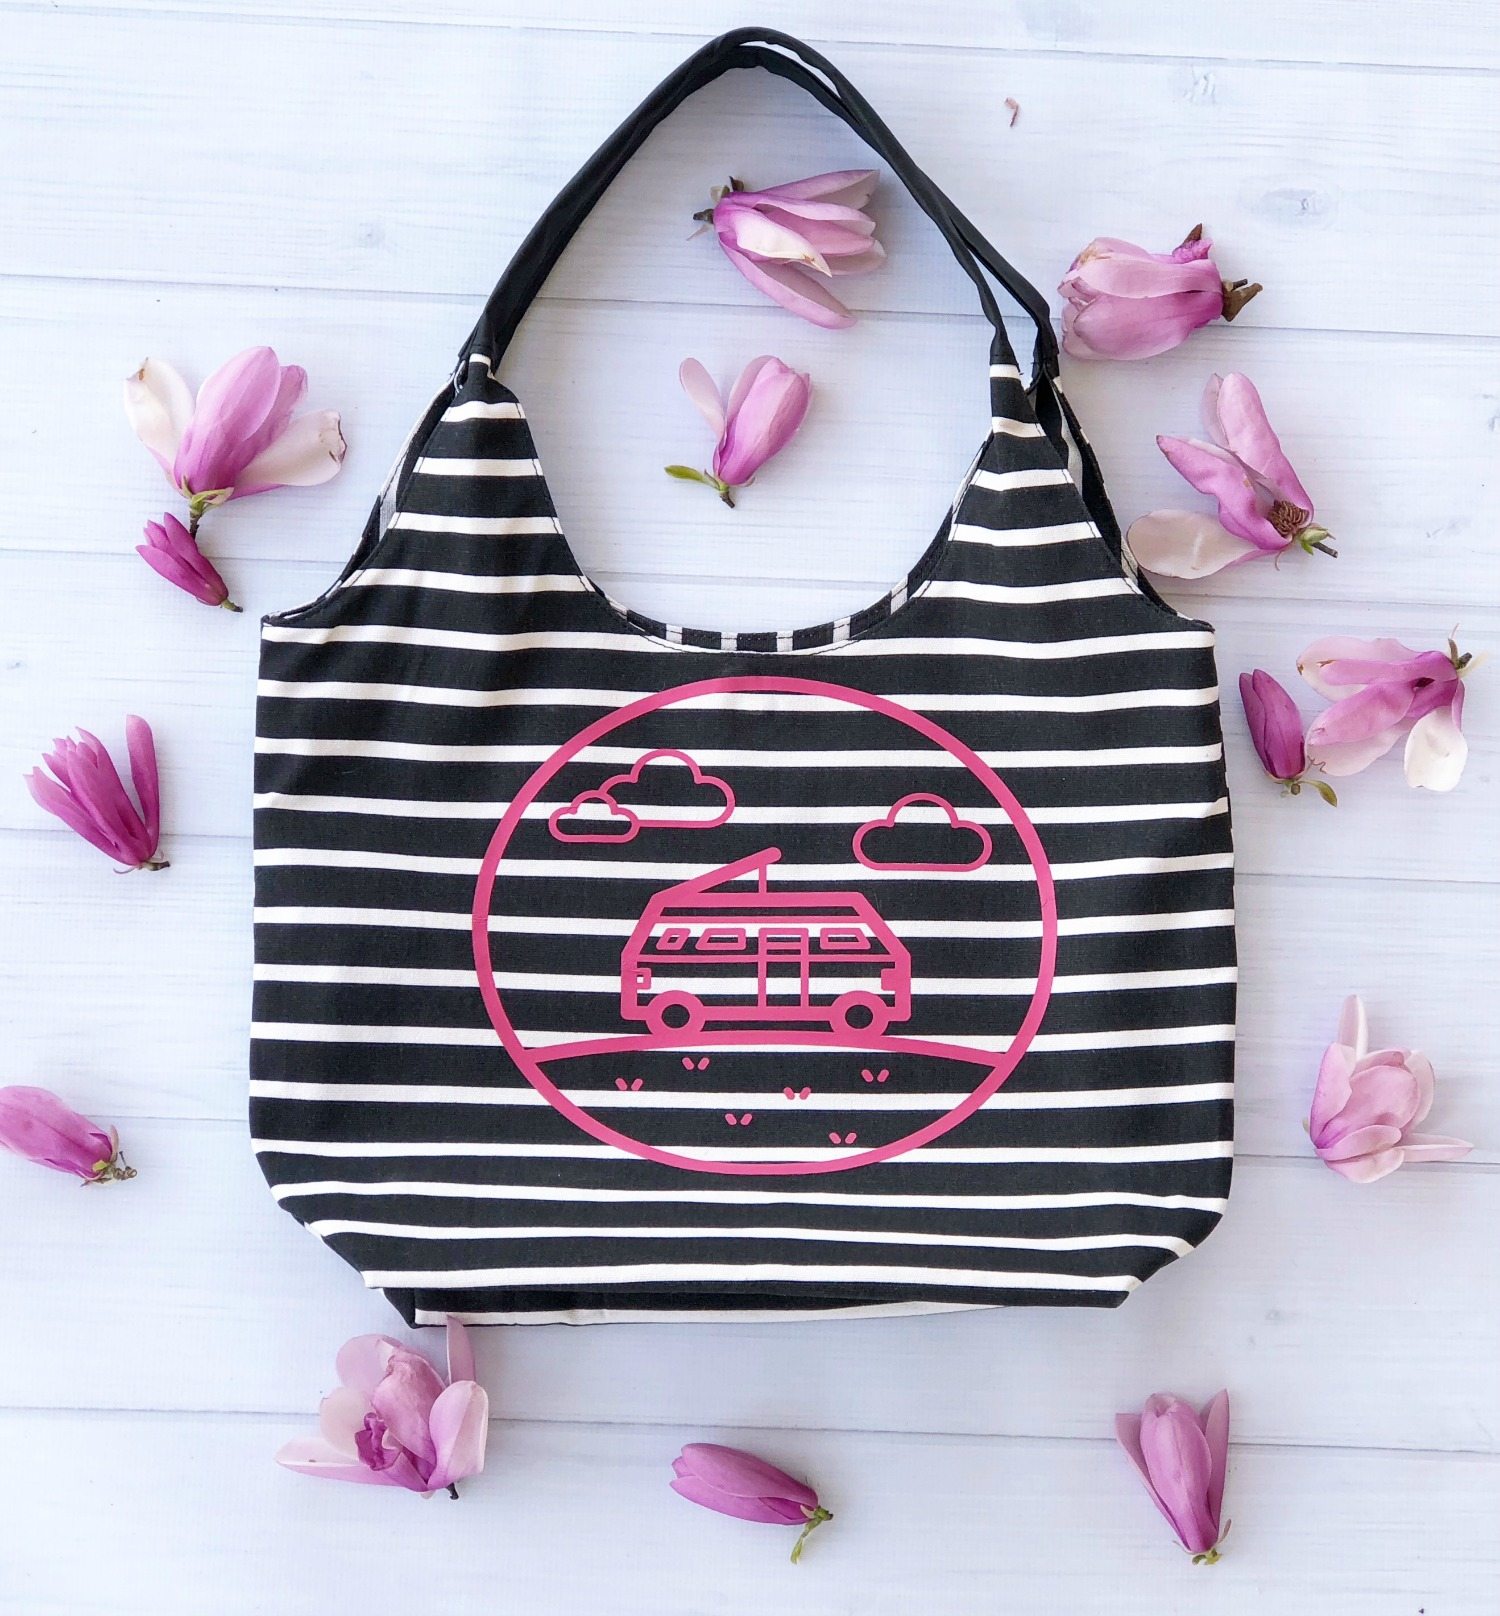 Cute Overnight Spring bag with Cricut design